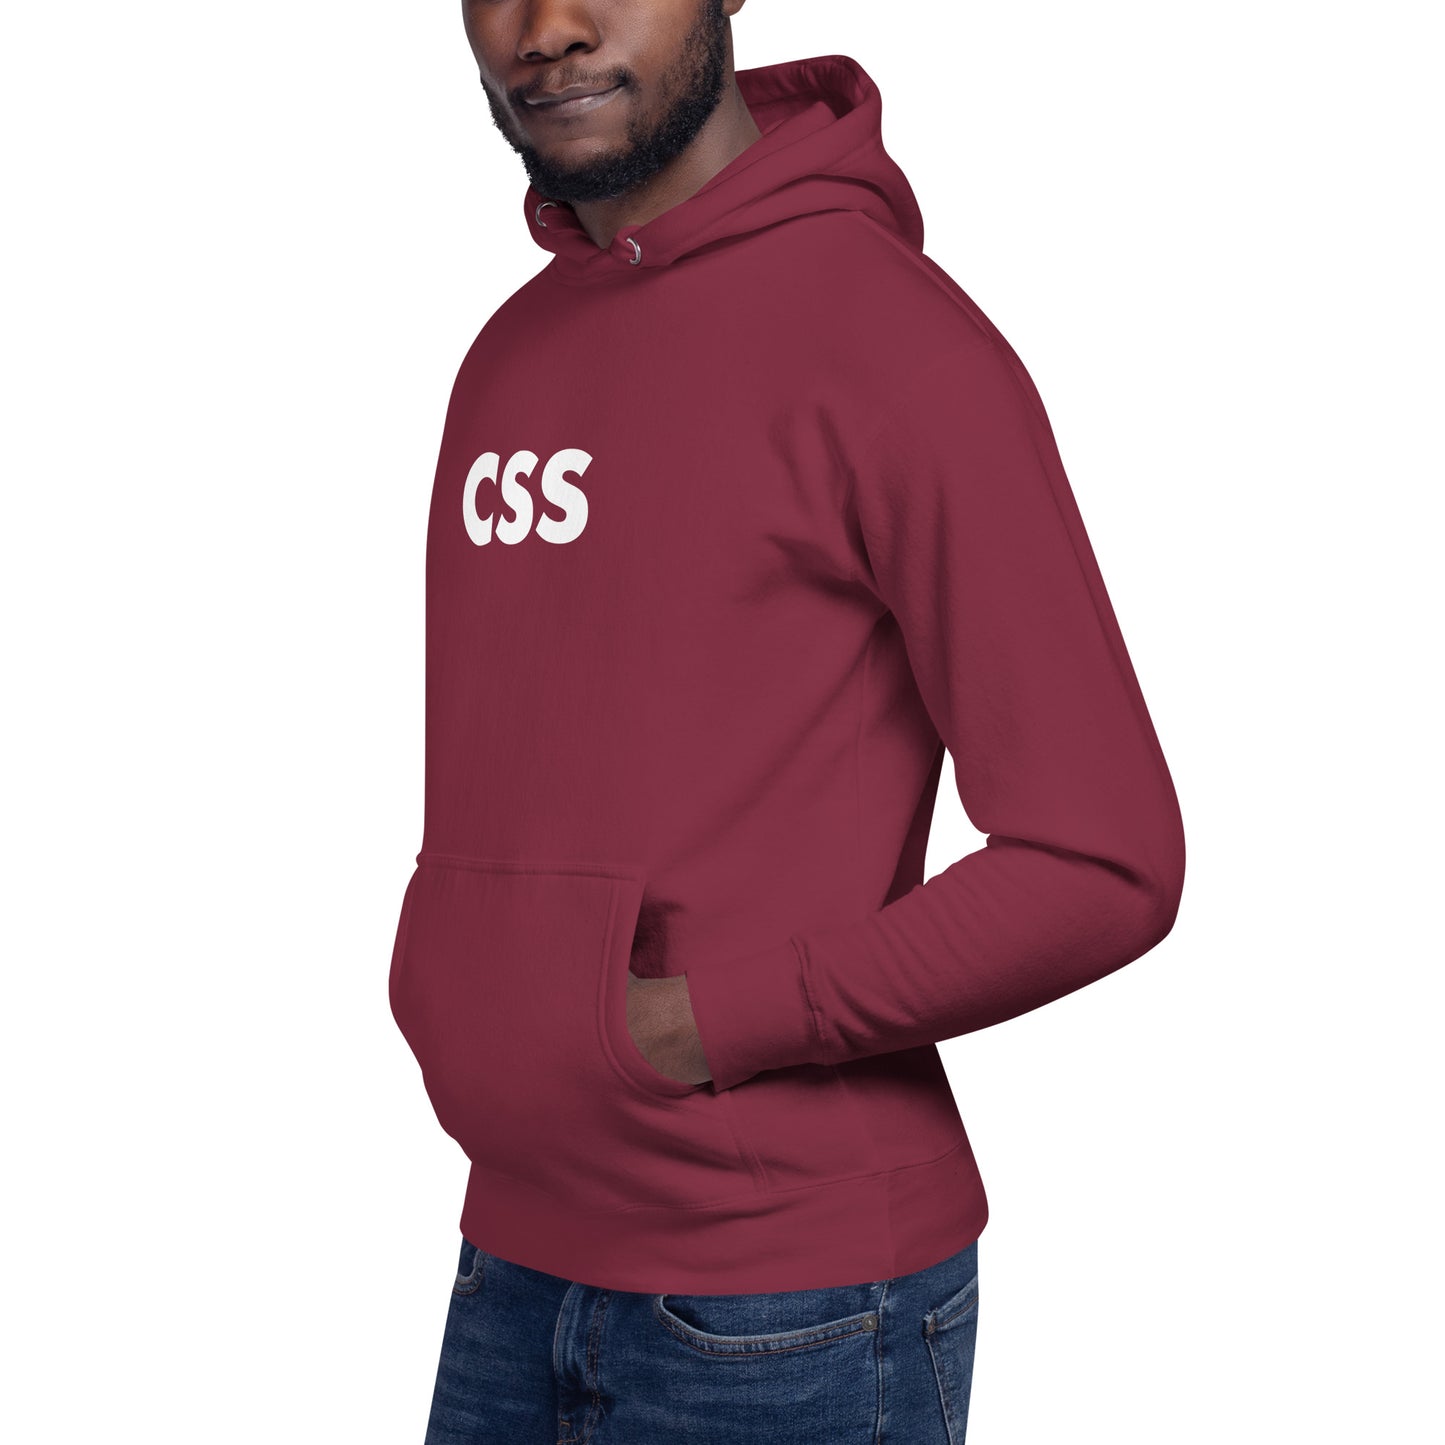 CSS Unisex Hoodie